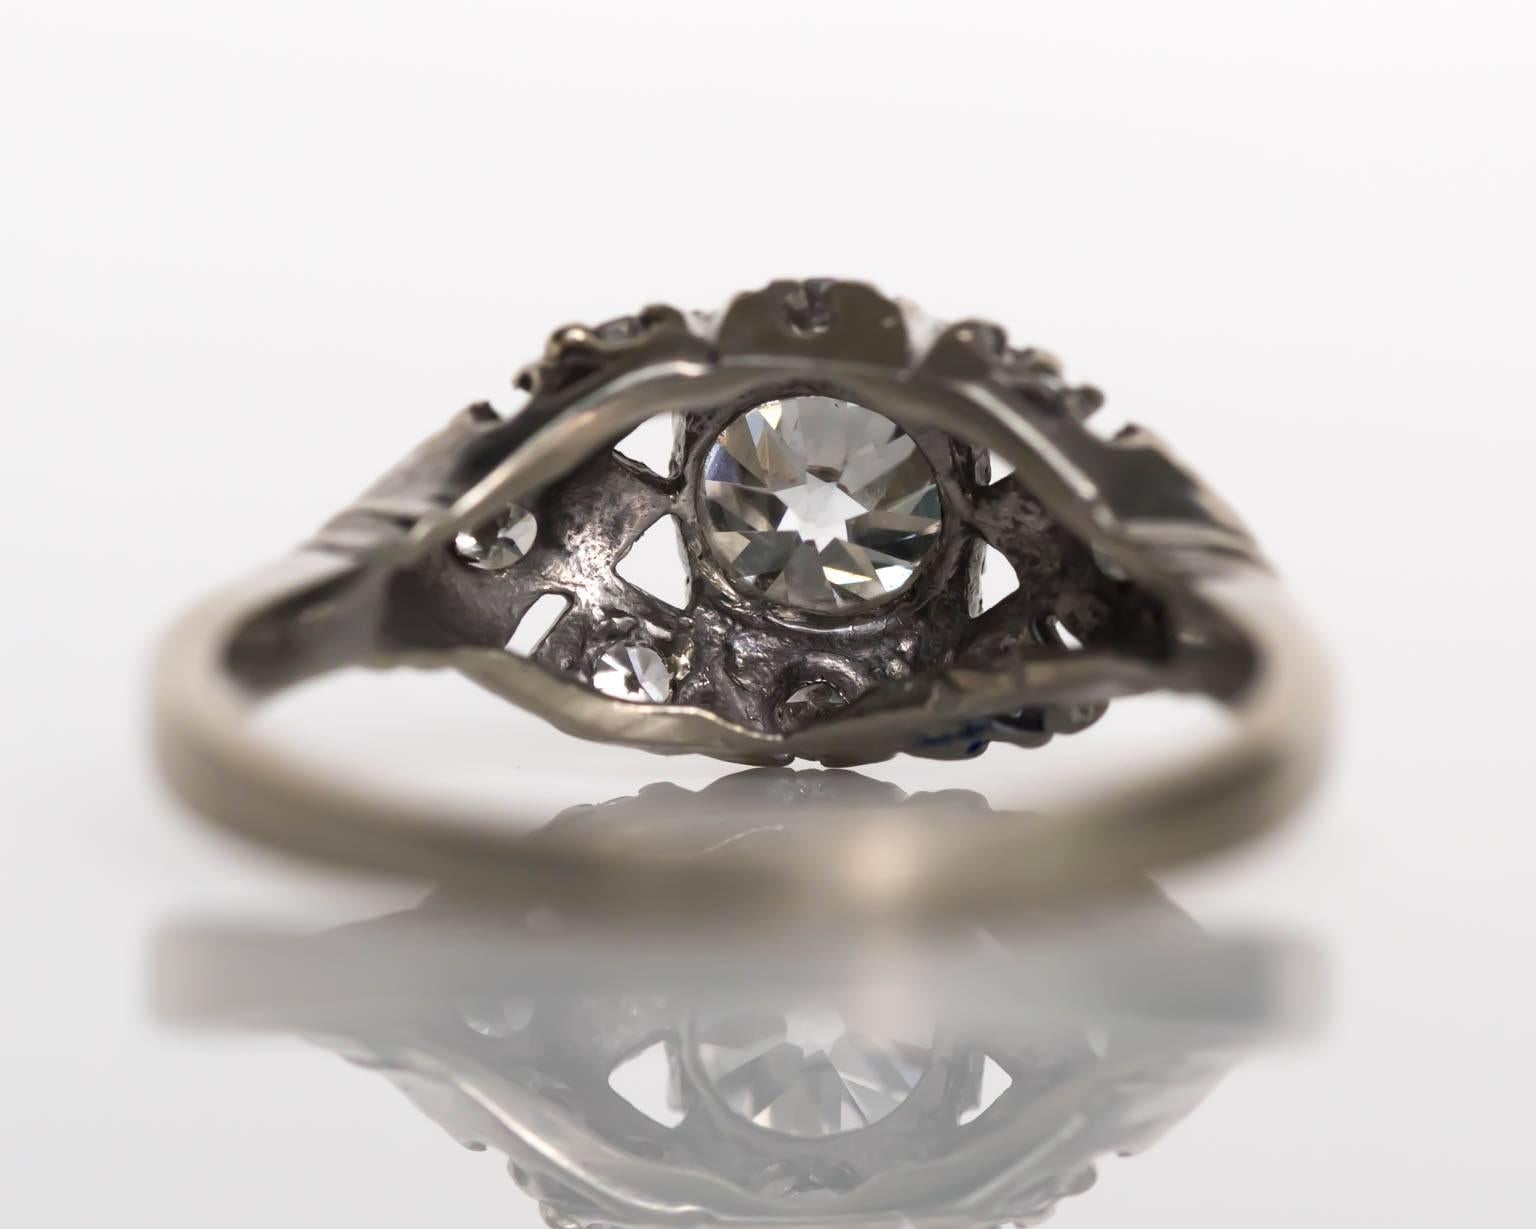 53 carat diamond ring